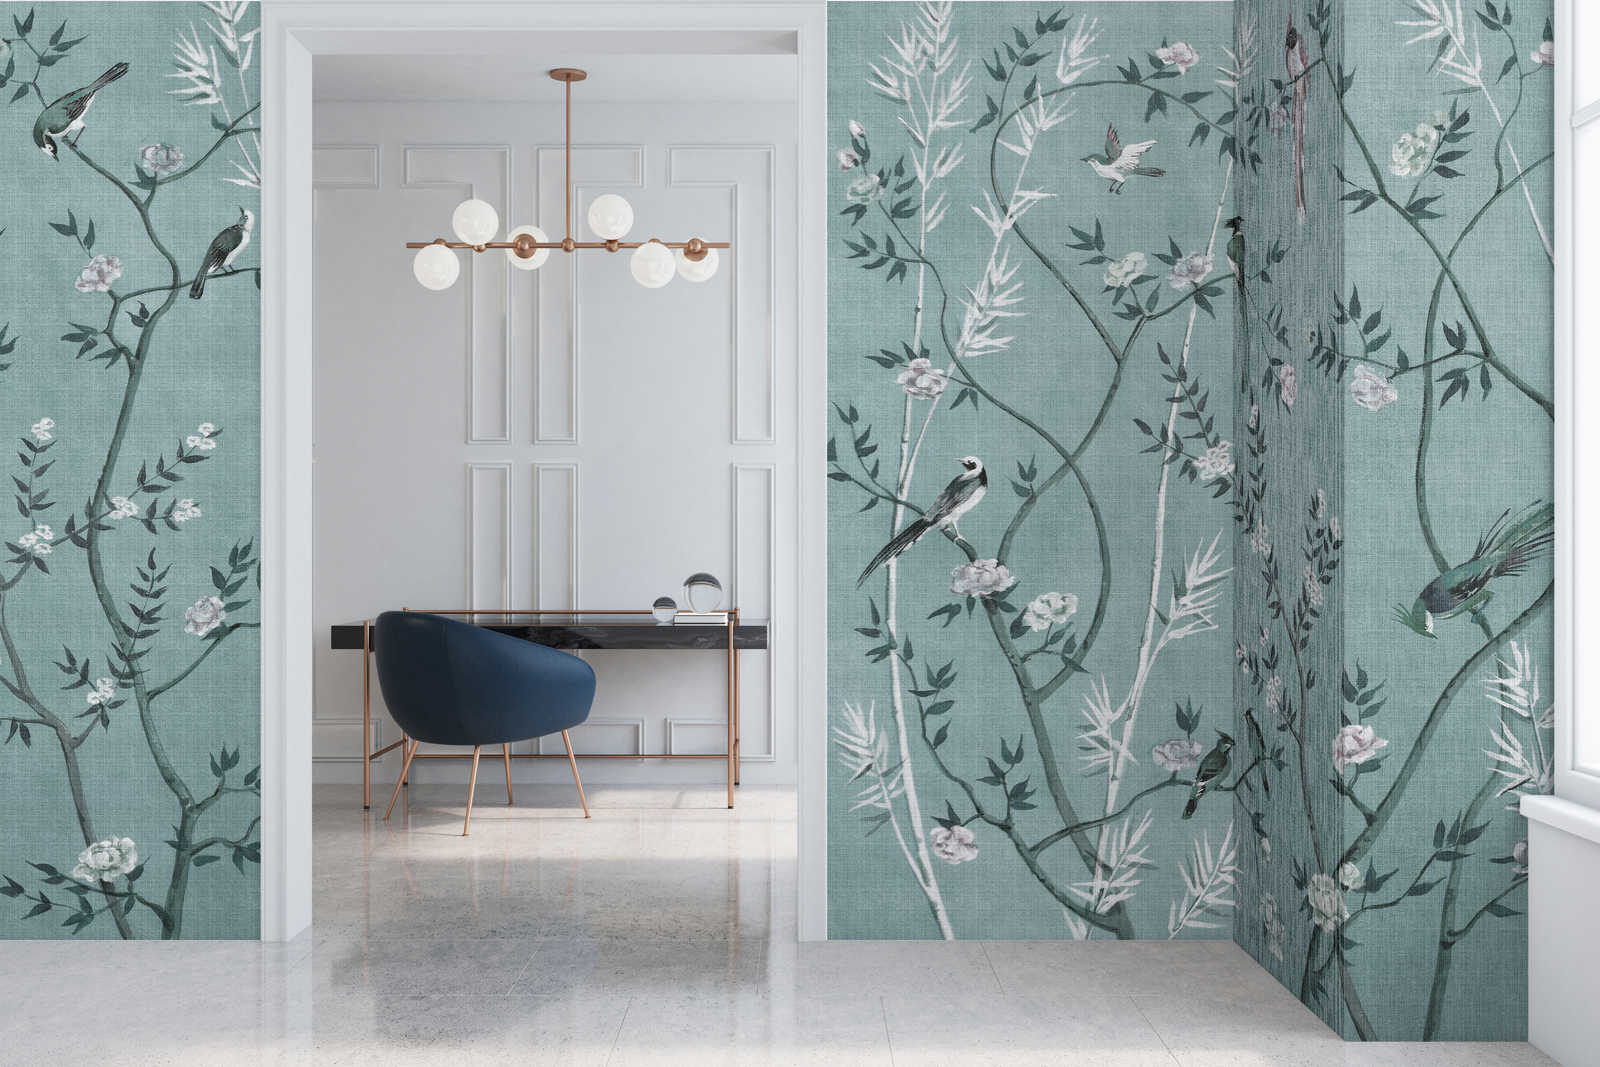             Tea Room 1 – Fototapete Vögel & Blüten Design in Petrol & Weiß
        